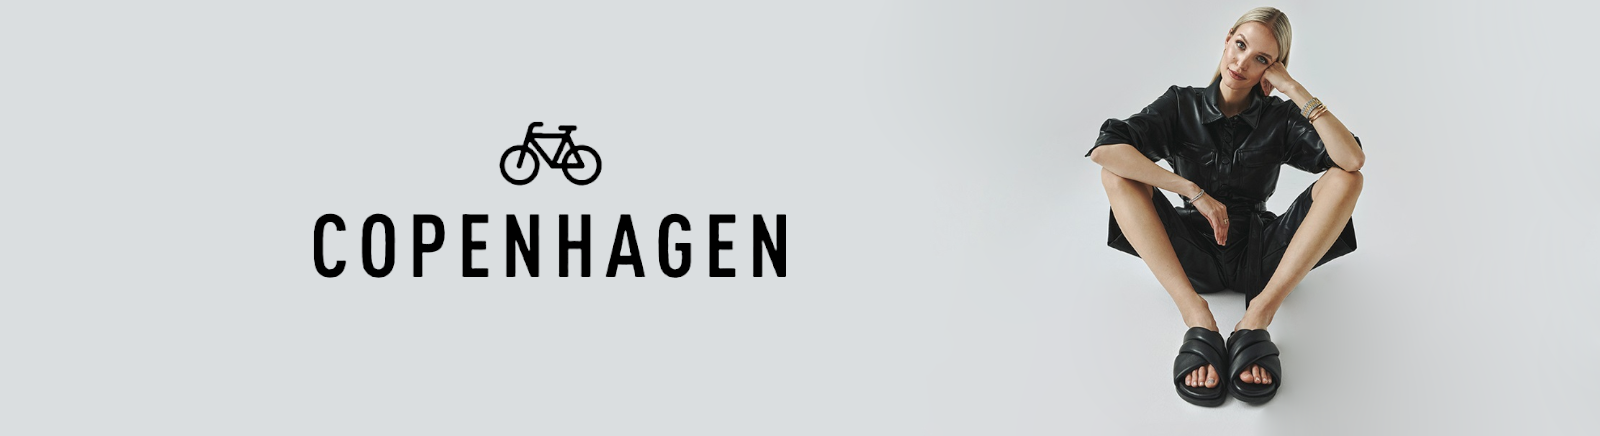 Prange: Copenhagen High-Top-Sneaker für Damen online shoppen